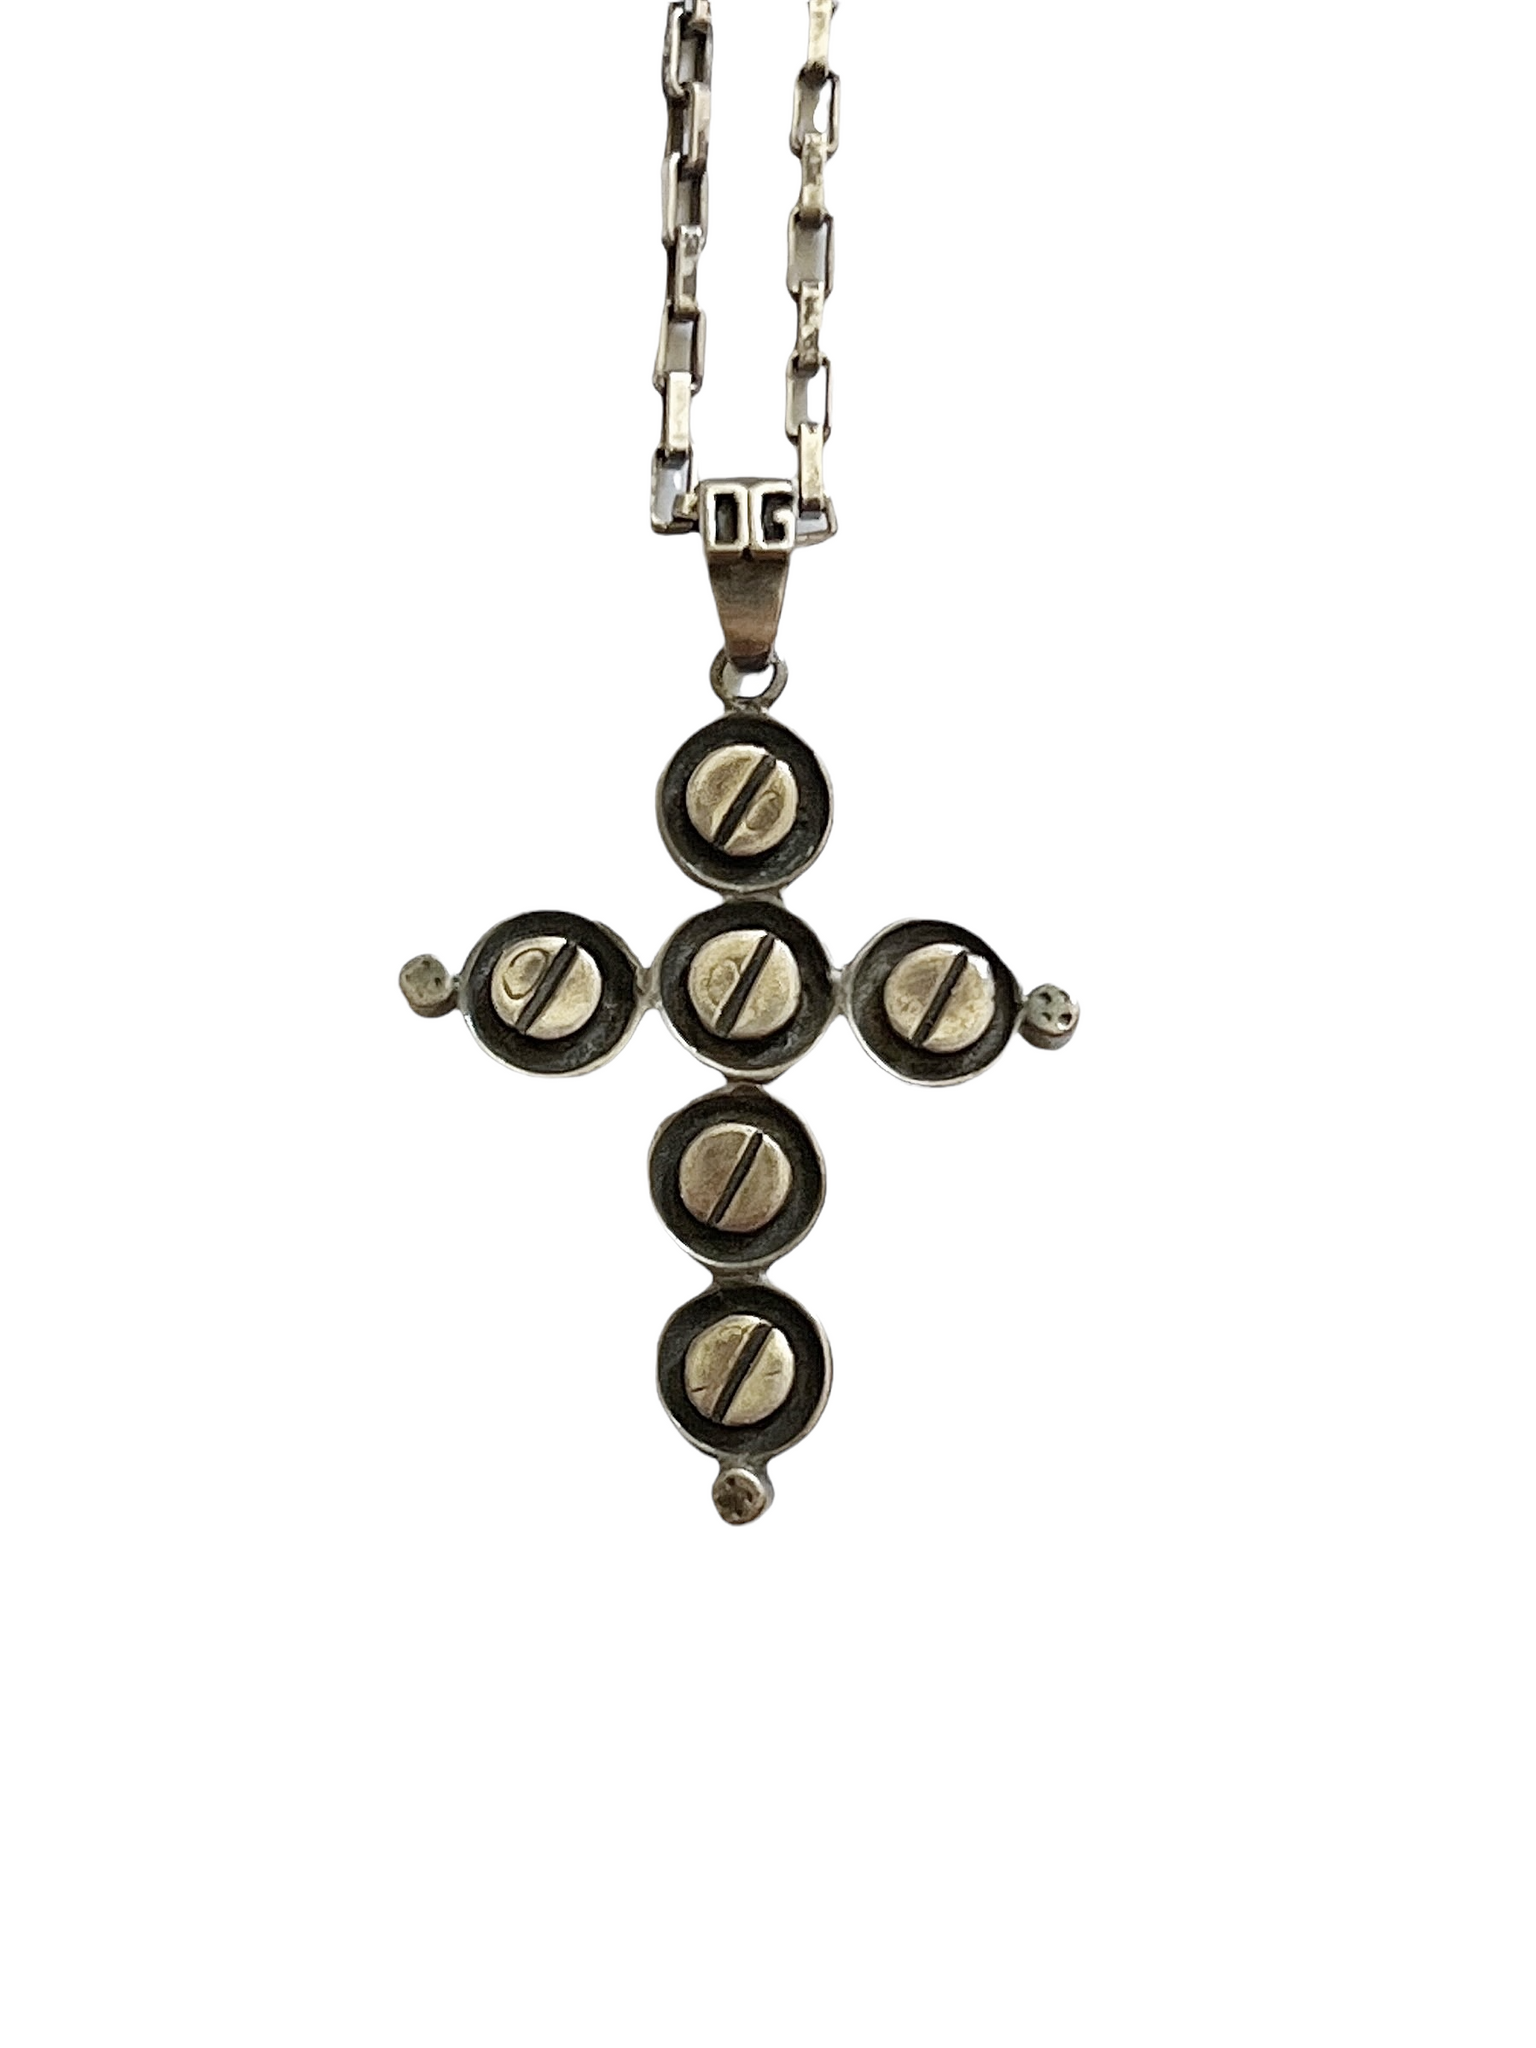 Silver Screw-cifix (Cross Necklace)